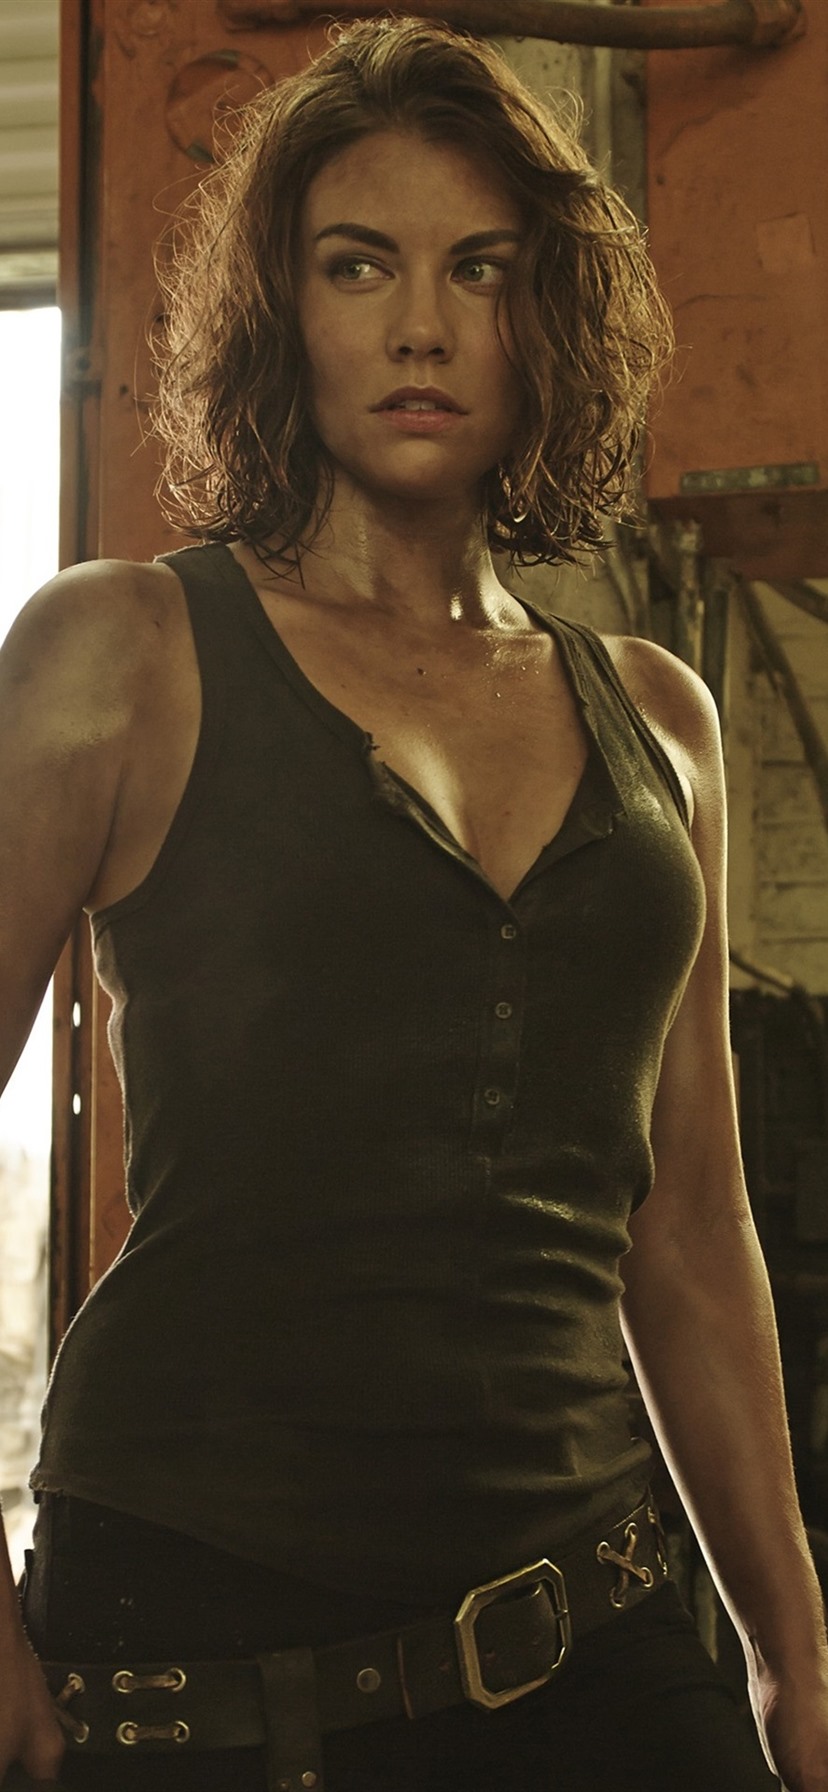 Lauren Cohan As Maggie Greene, The Walking Dead Season 5 1080x1920 IPhone 8 7 6 6S Plus Wallpaper, Background, Picture, Image